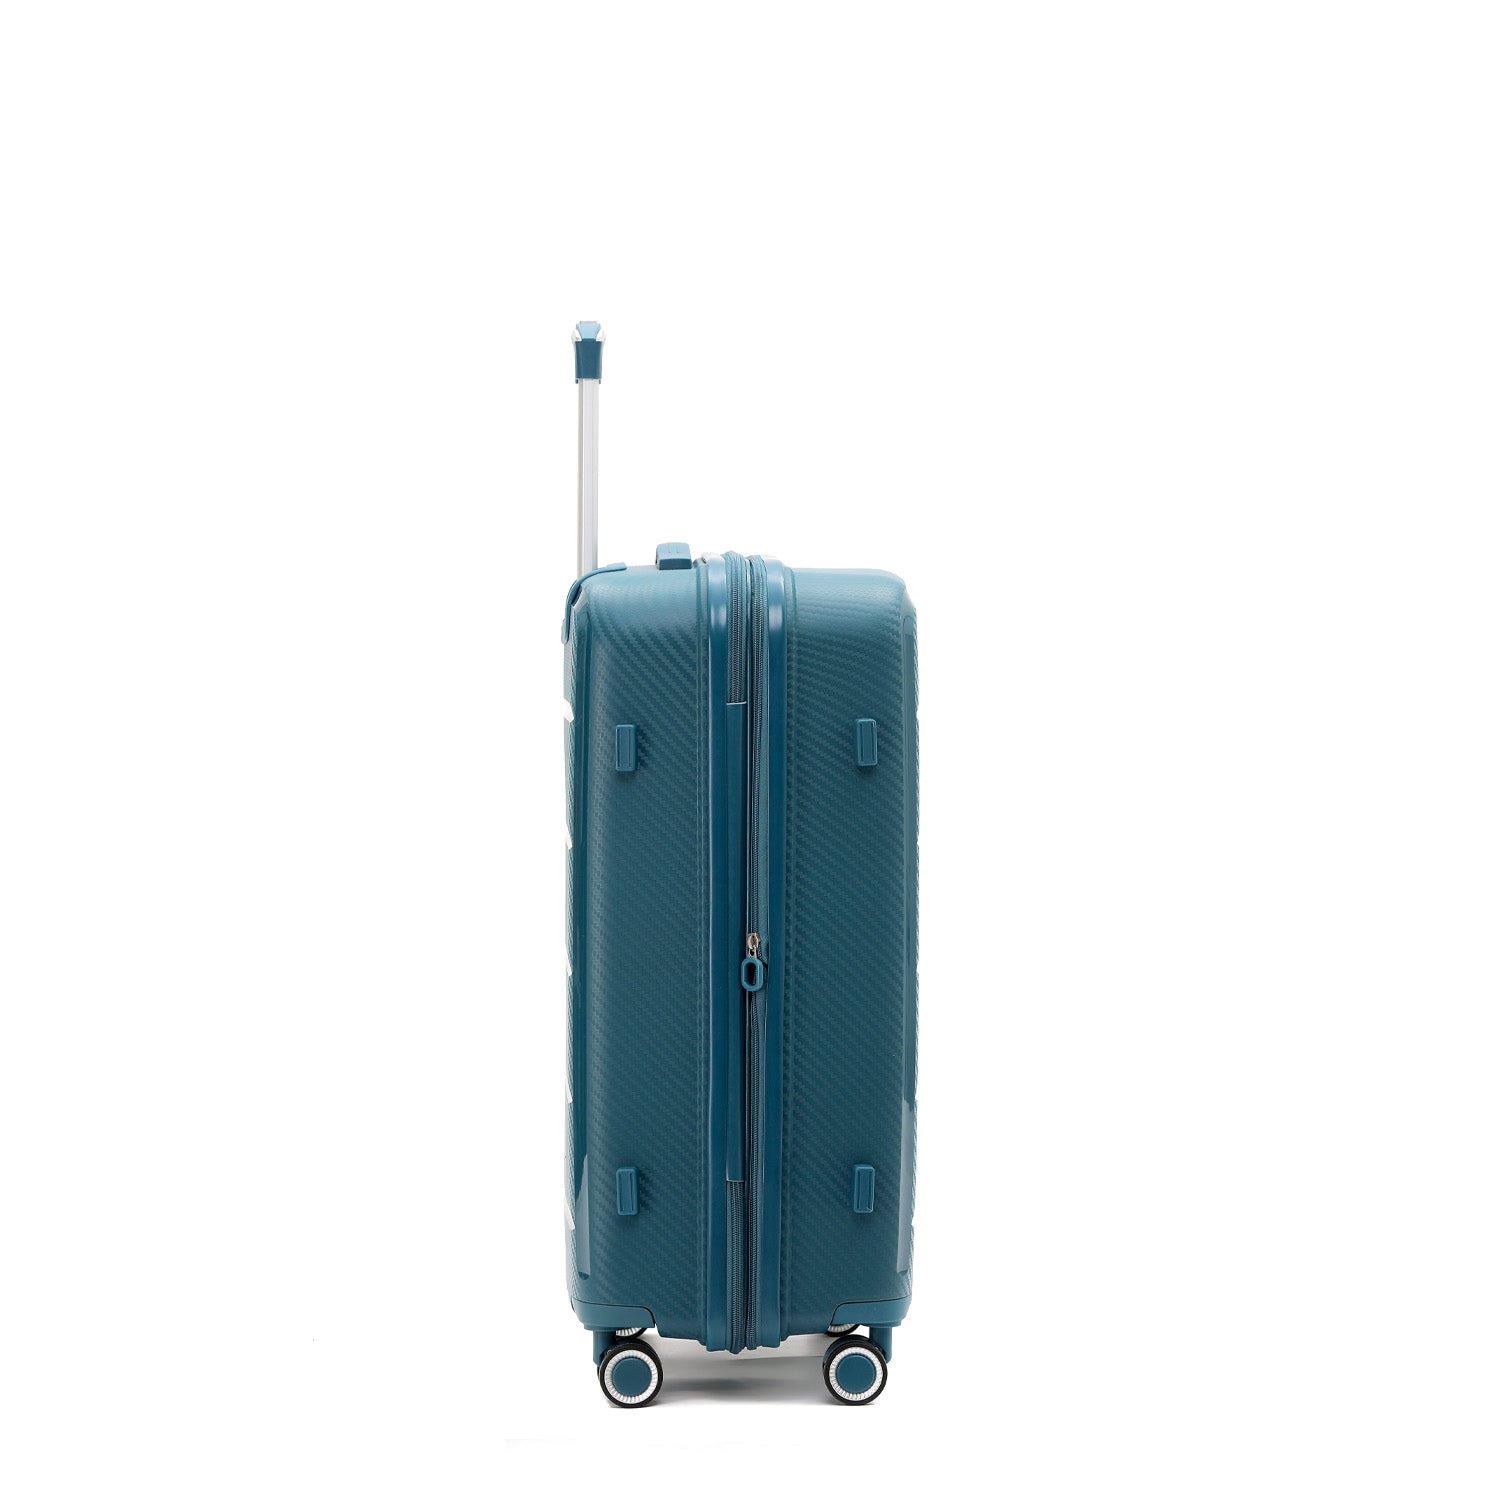 Paklite - PA7350 Set of 3 Suitcases - Blue-14